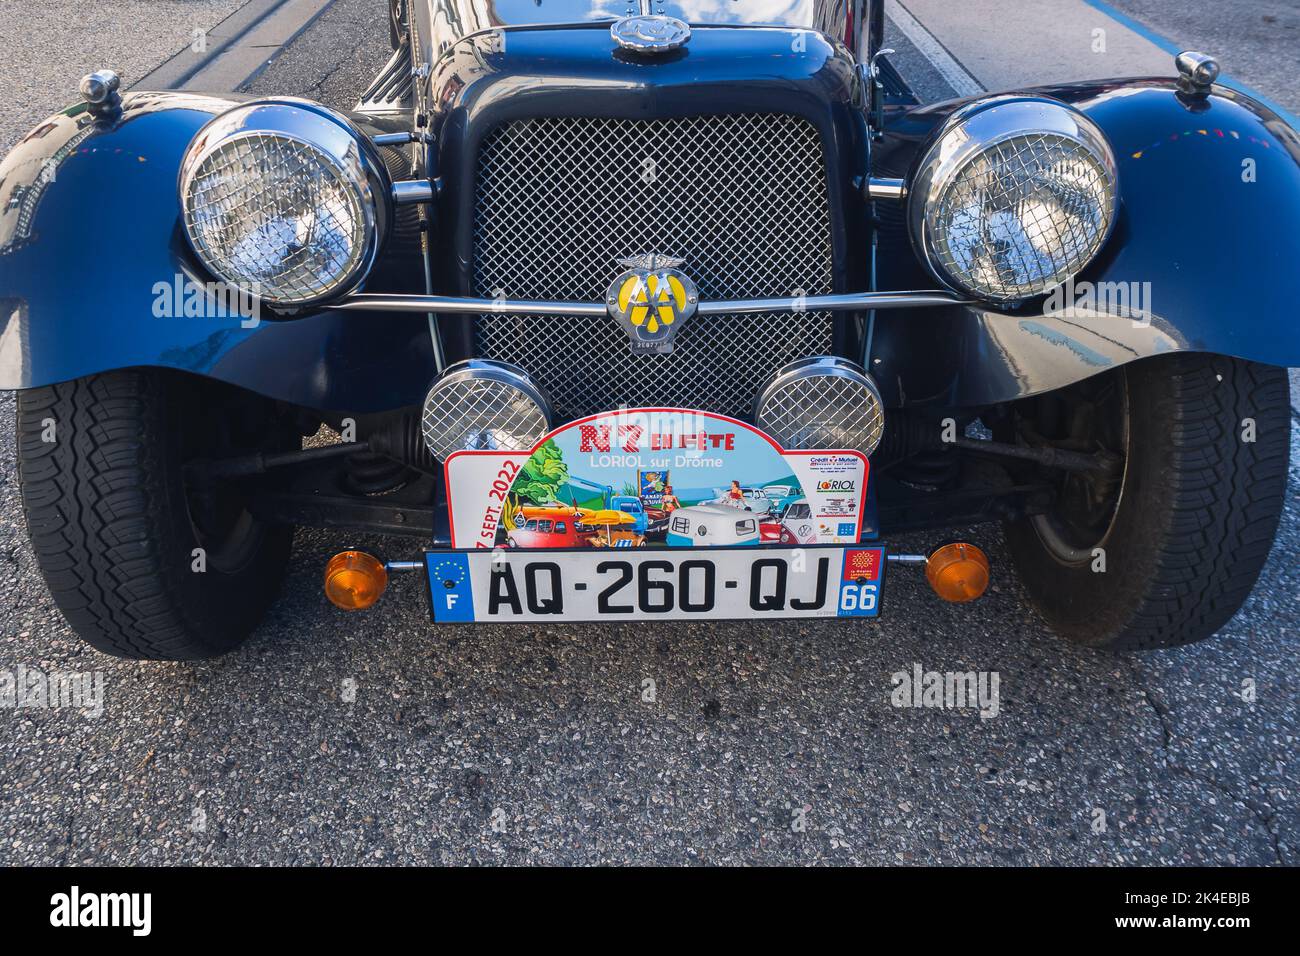 Loriol sur Drome, France - 17 September, 2022: Vintage Eniak Antique is an automobile built in Argentina by Eniak beginning in 1983. Stock Photo